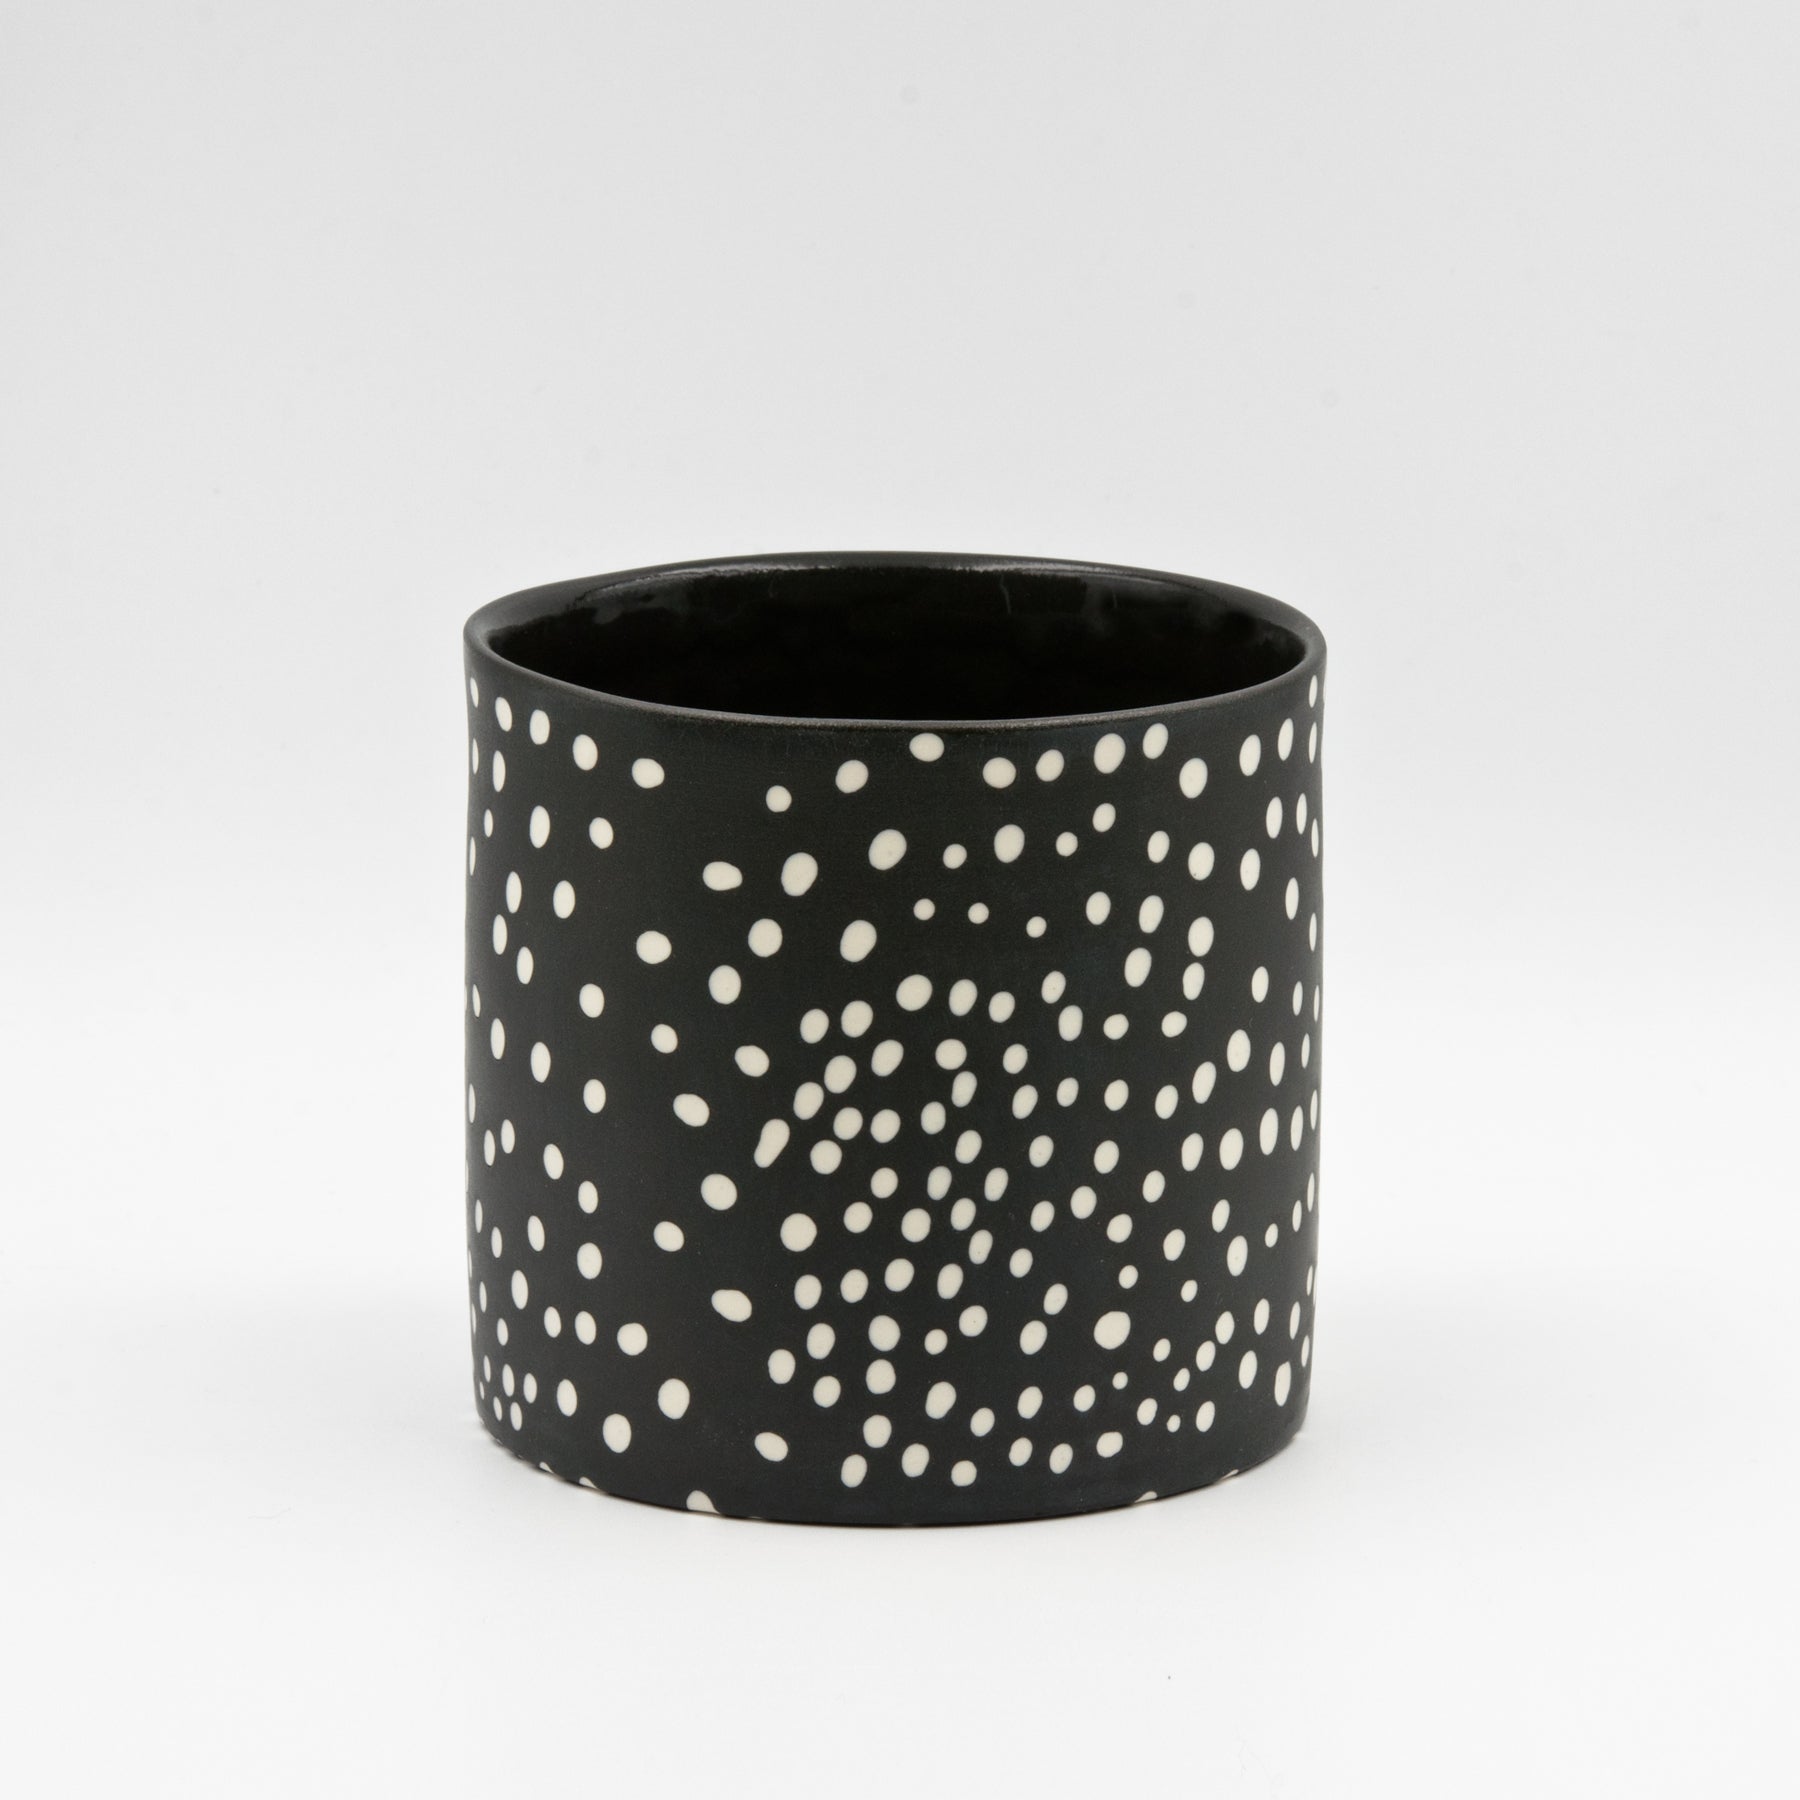 Polka dot cup, black